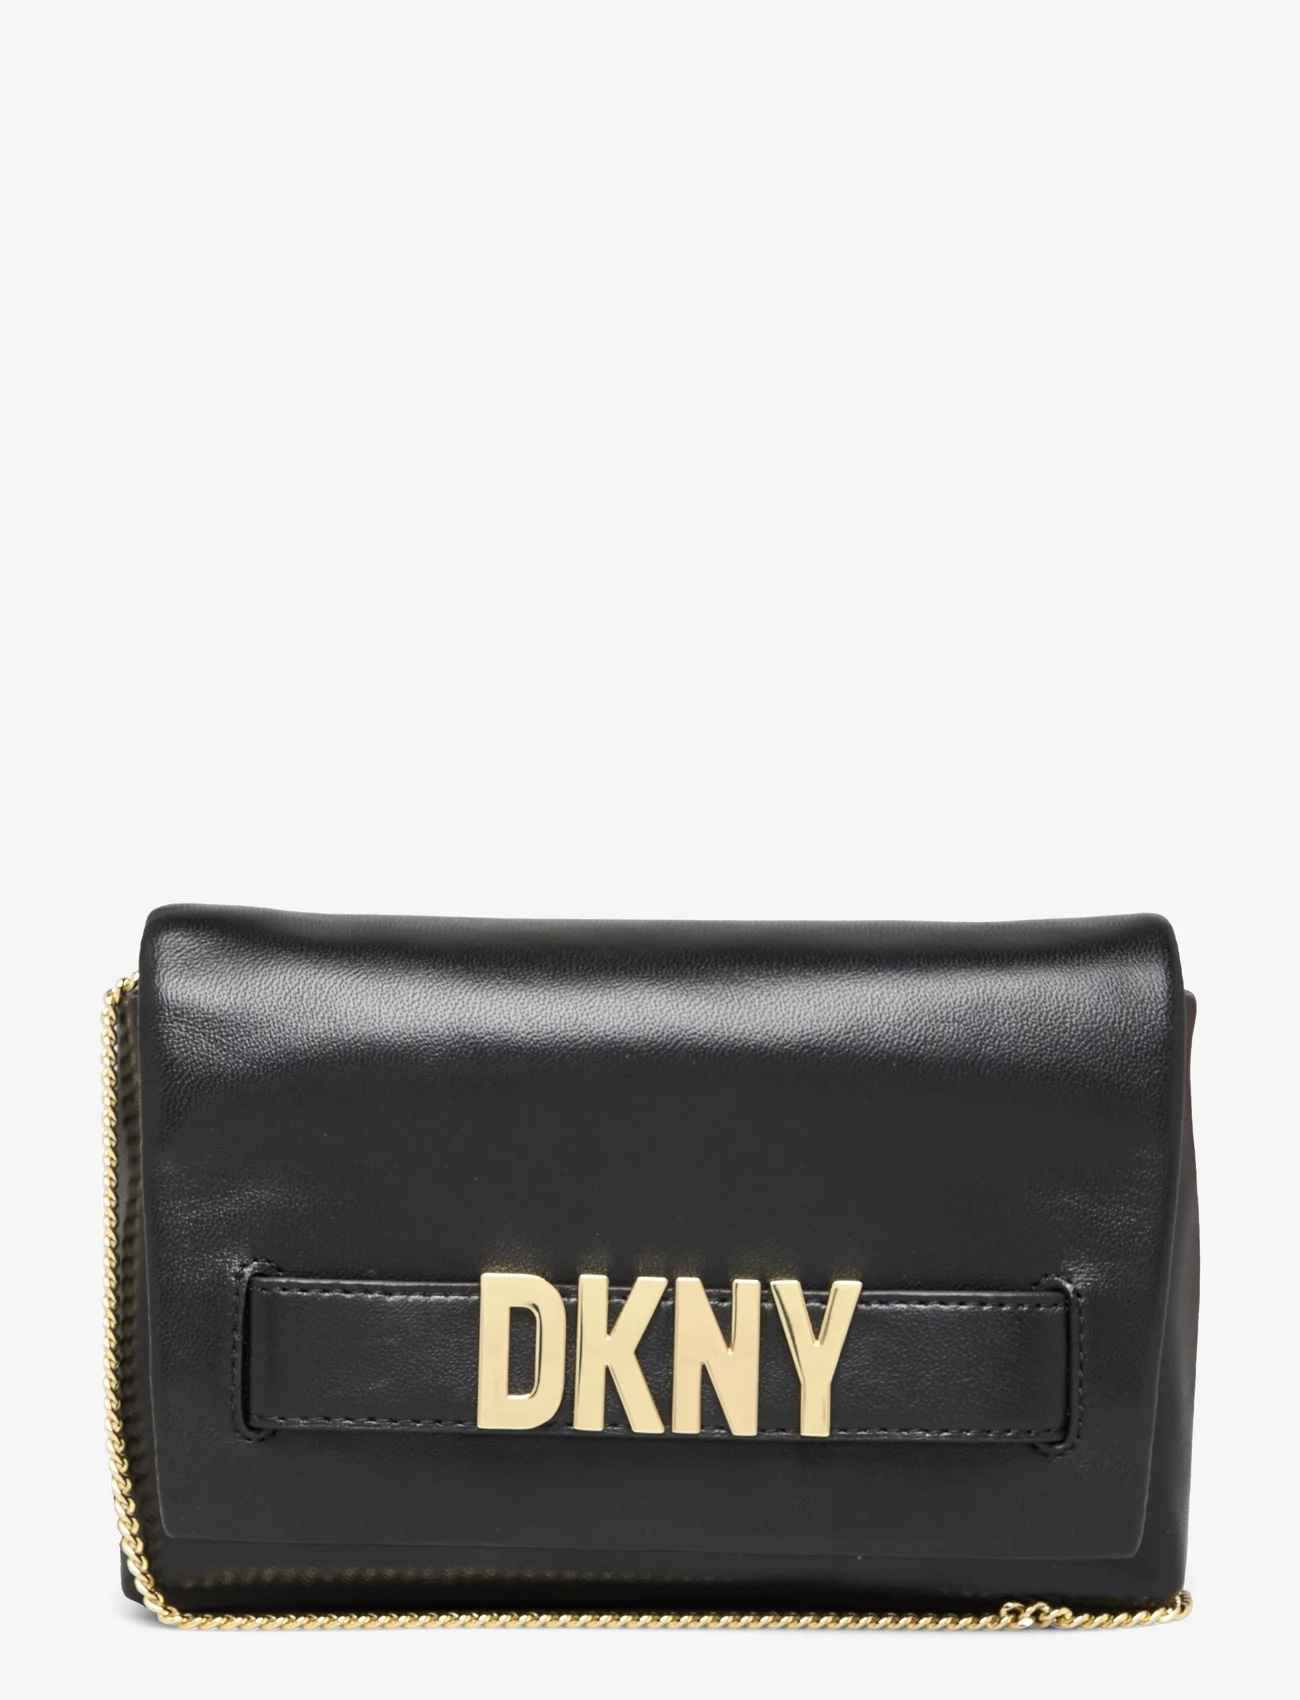 DKNY Bags - PILAR CLUTCH - birthday gifts - bgd - blk/gold - 0